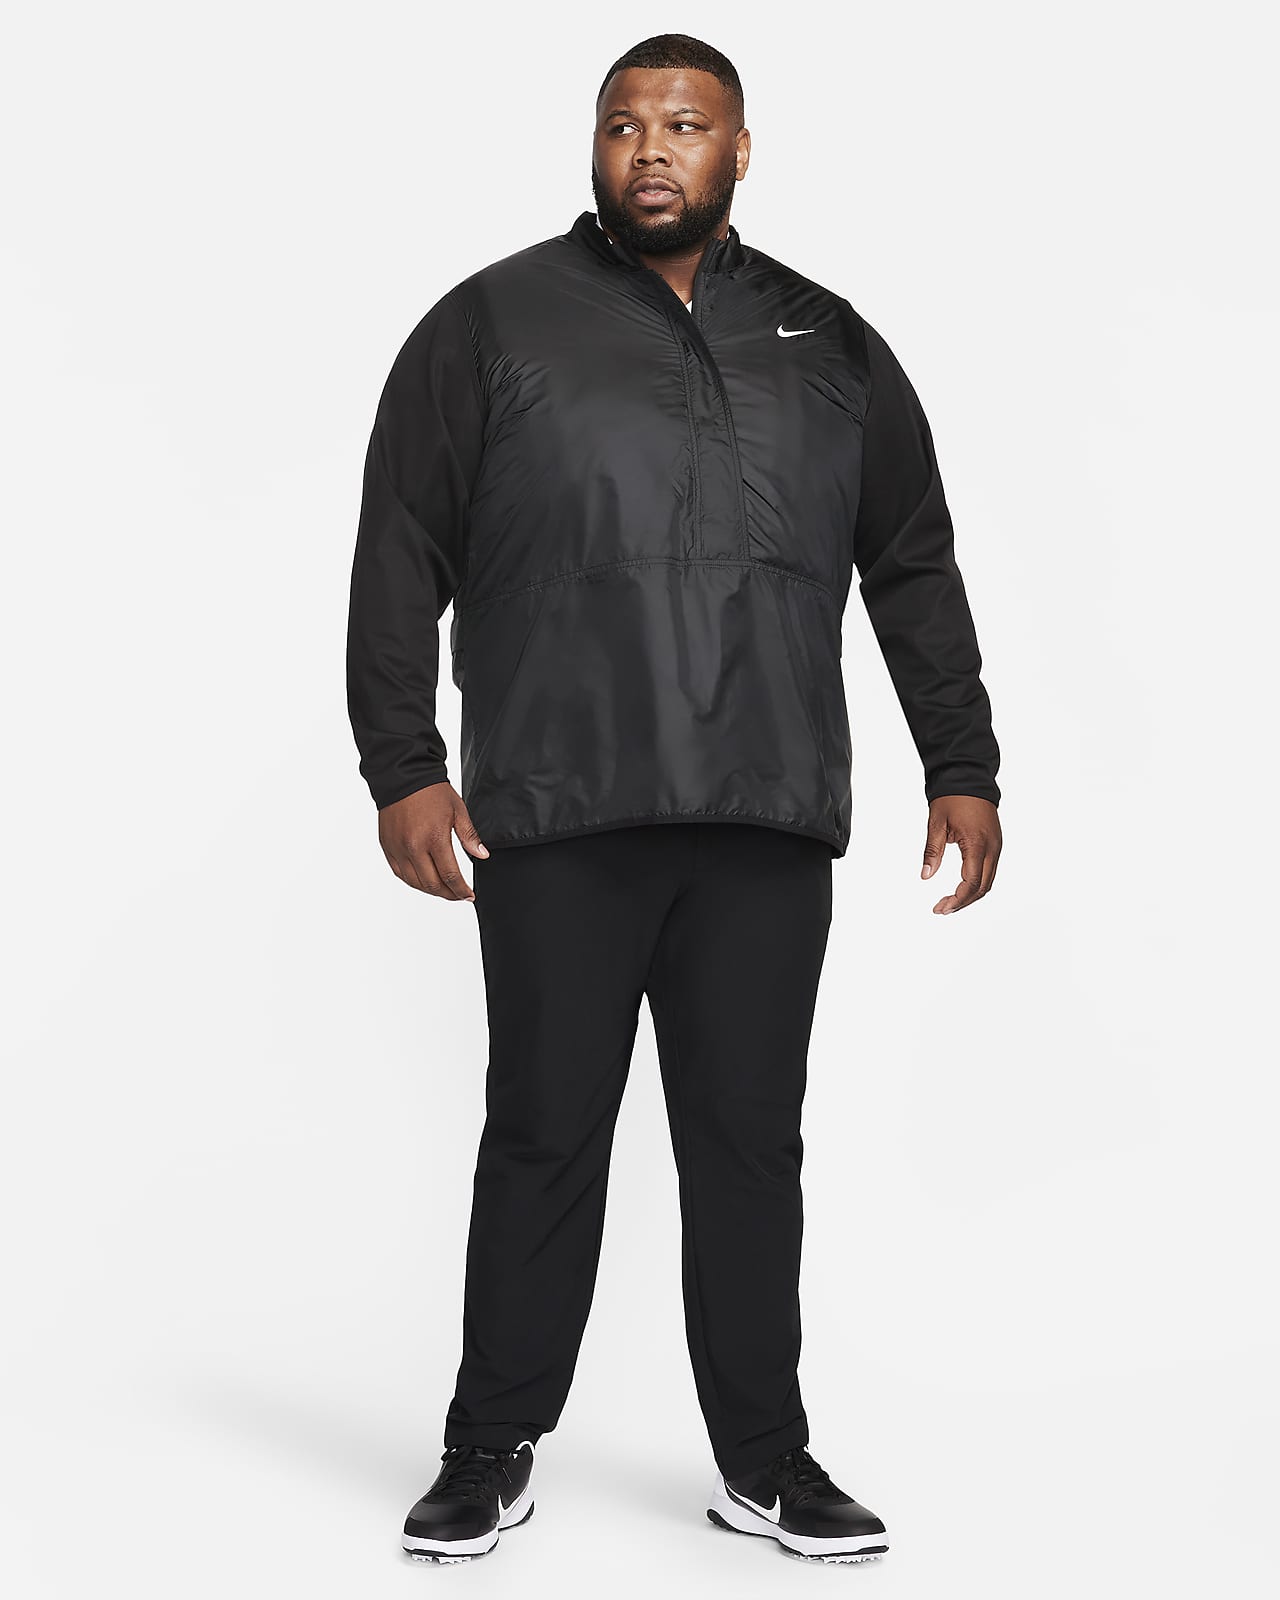 Jacket. Therma-FIT 1/2-Zip ADV Repel Nike Men\'s Golf